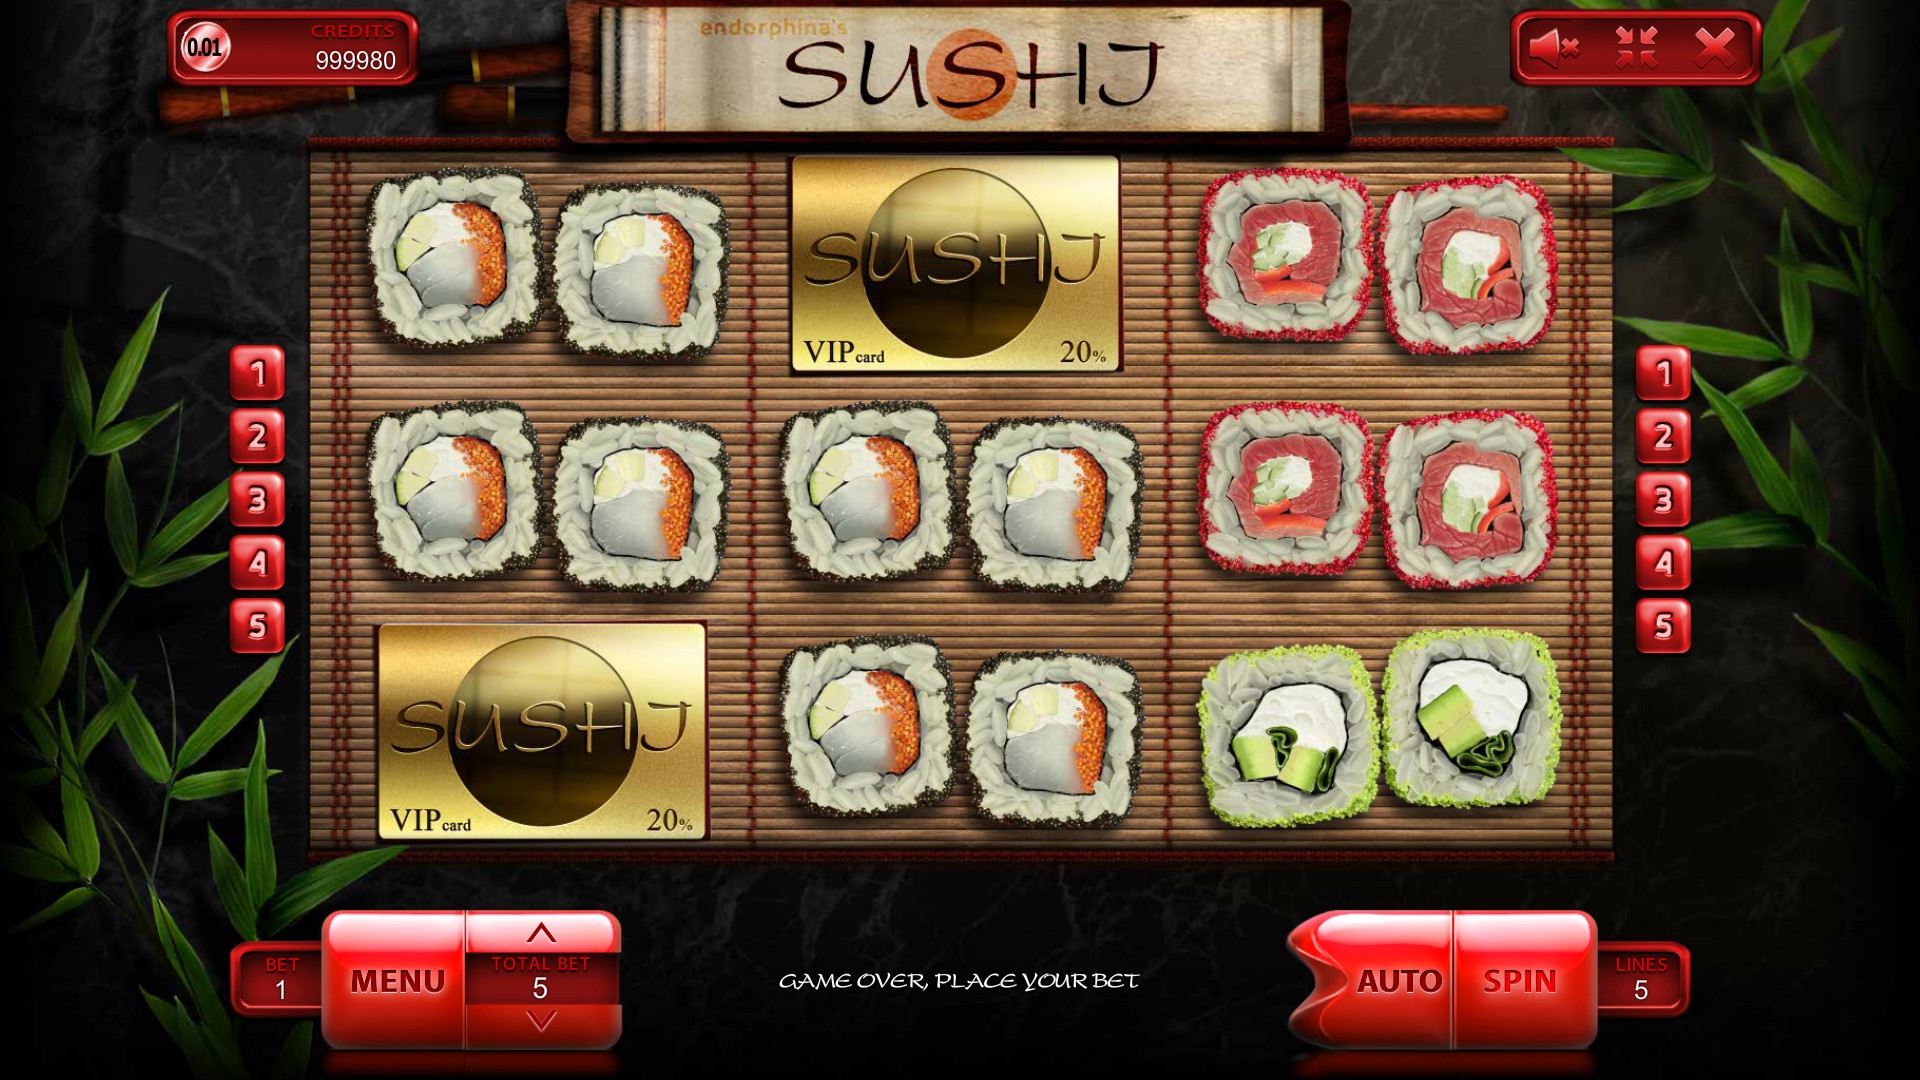 Sushi (Sushi) from category Slots